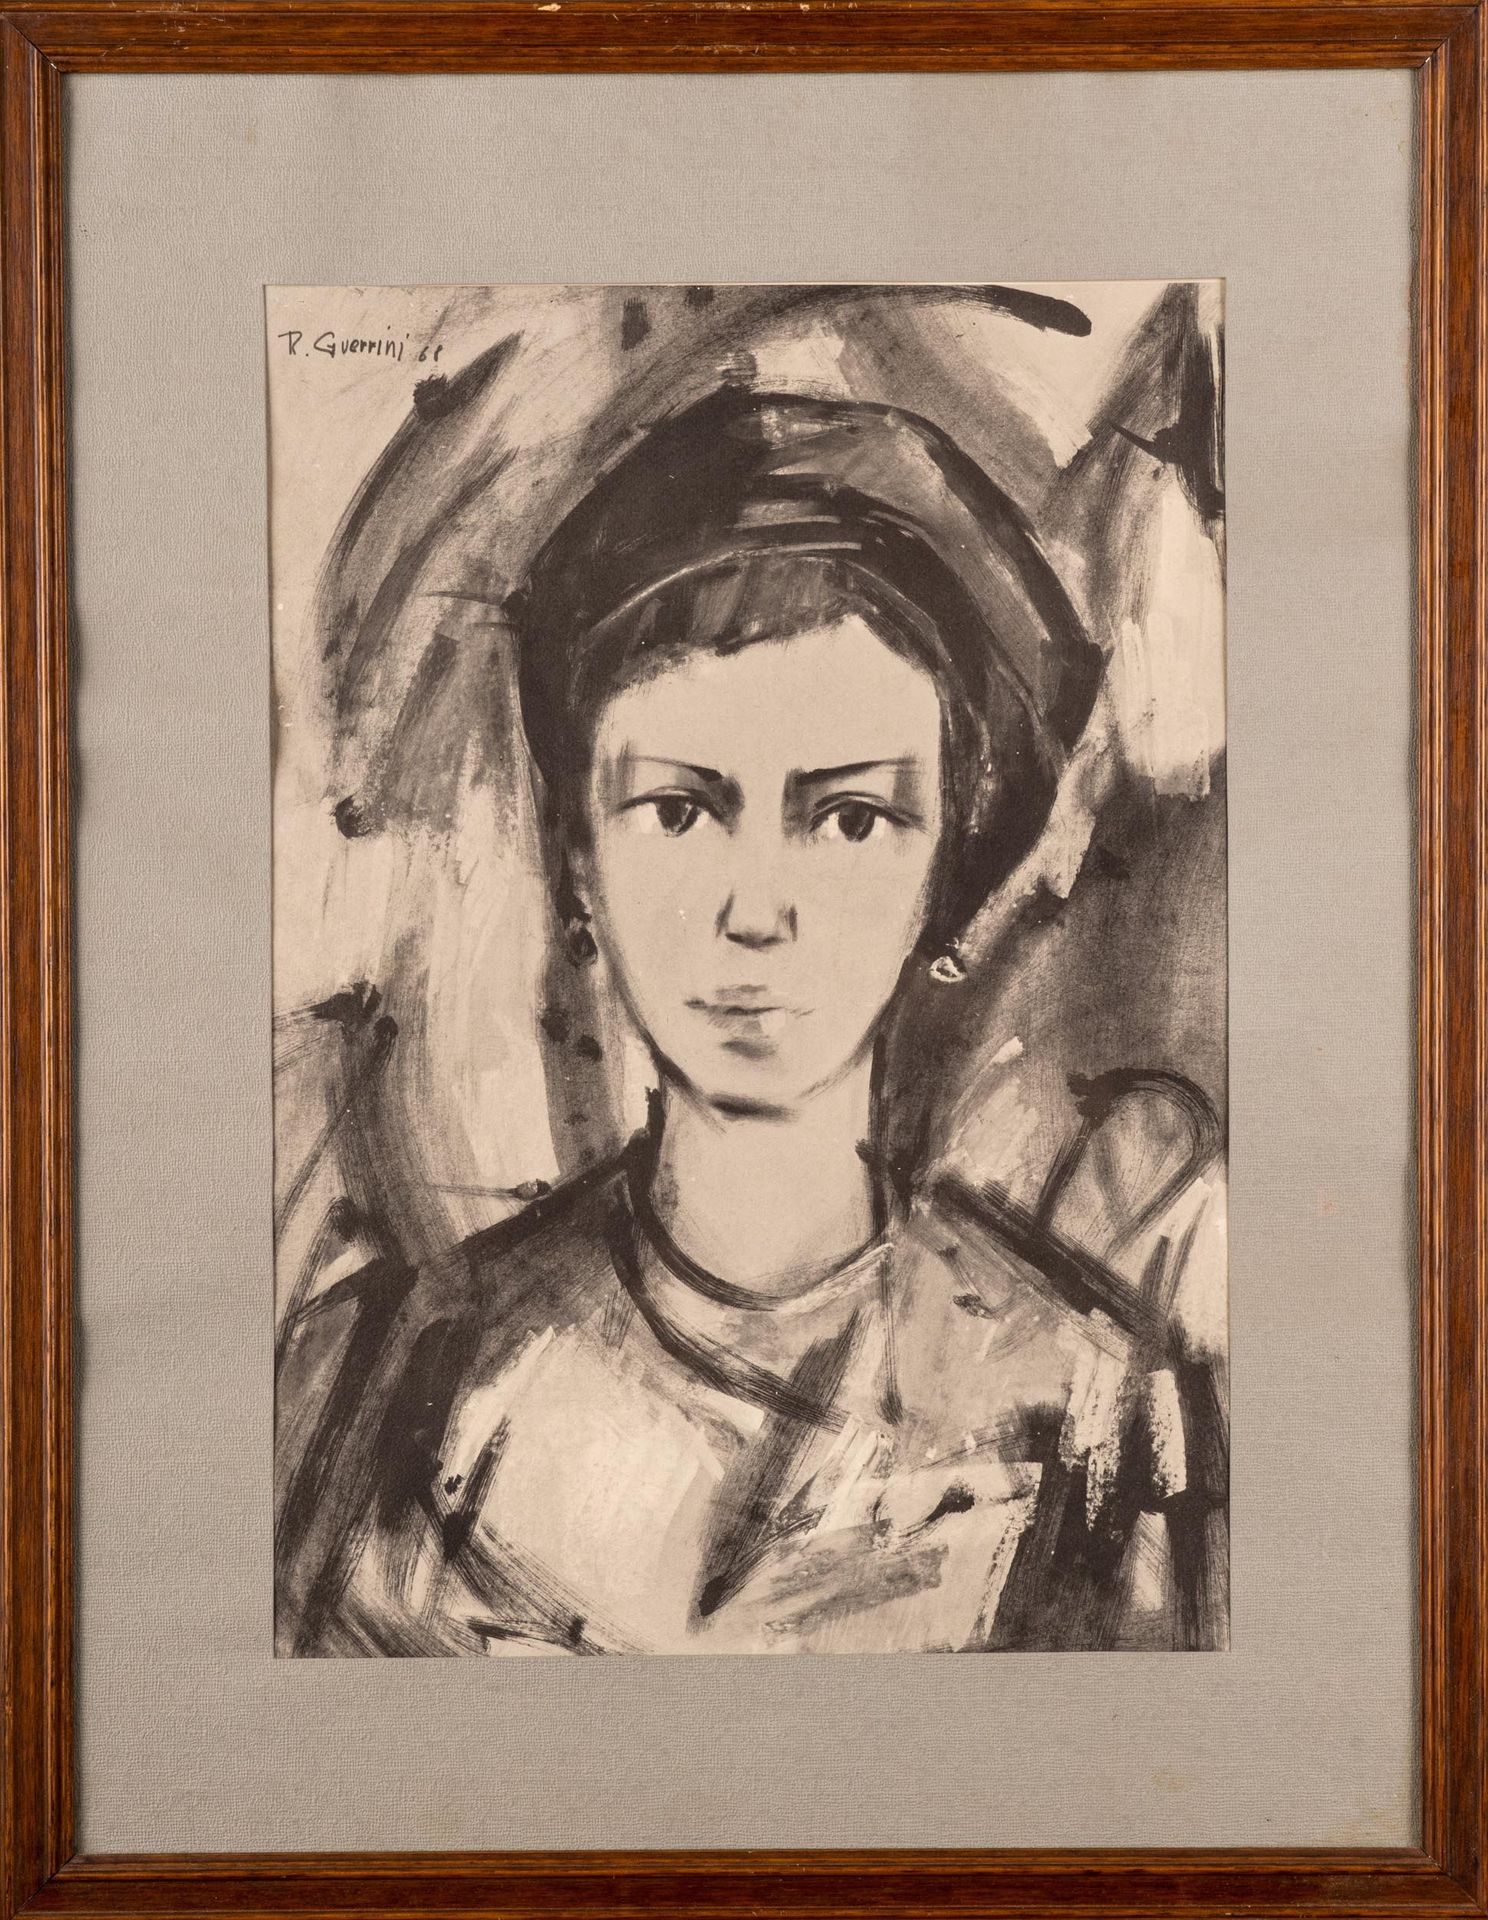 RENATO GUERRINI (Abbadia San Salvatore) 一个女人的画像

多次在纸上

49 x 34 cm